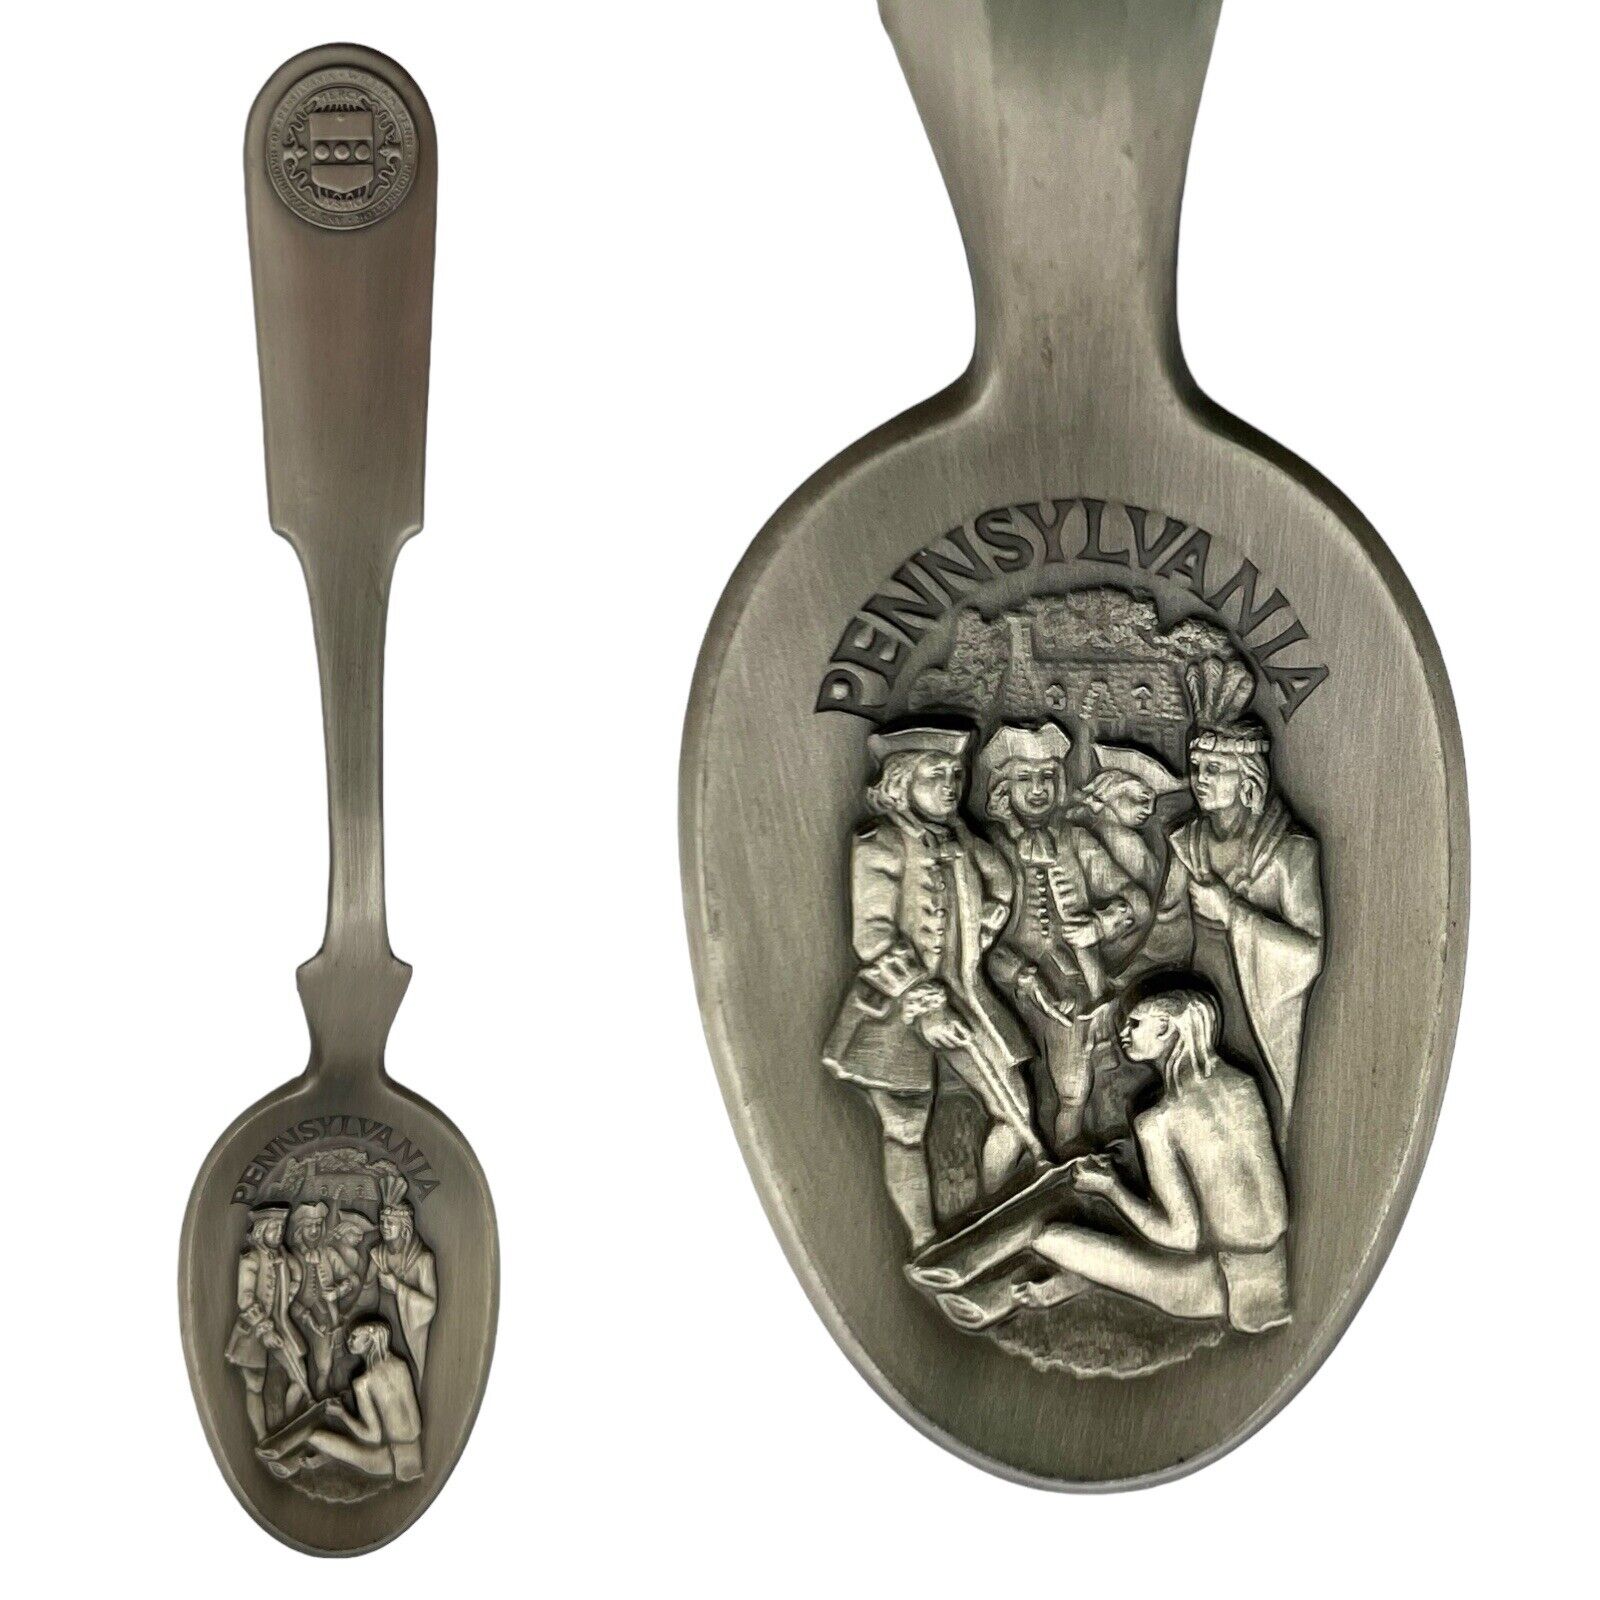 VTG 1975 Franklin Mint American Colonies Decorative Spoon PENNSYLVANIA Pewter